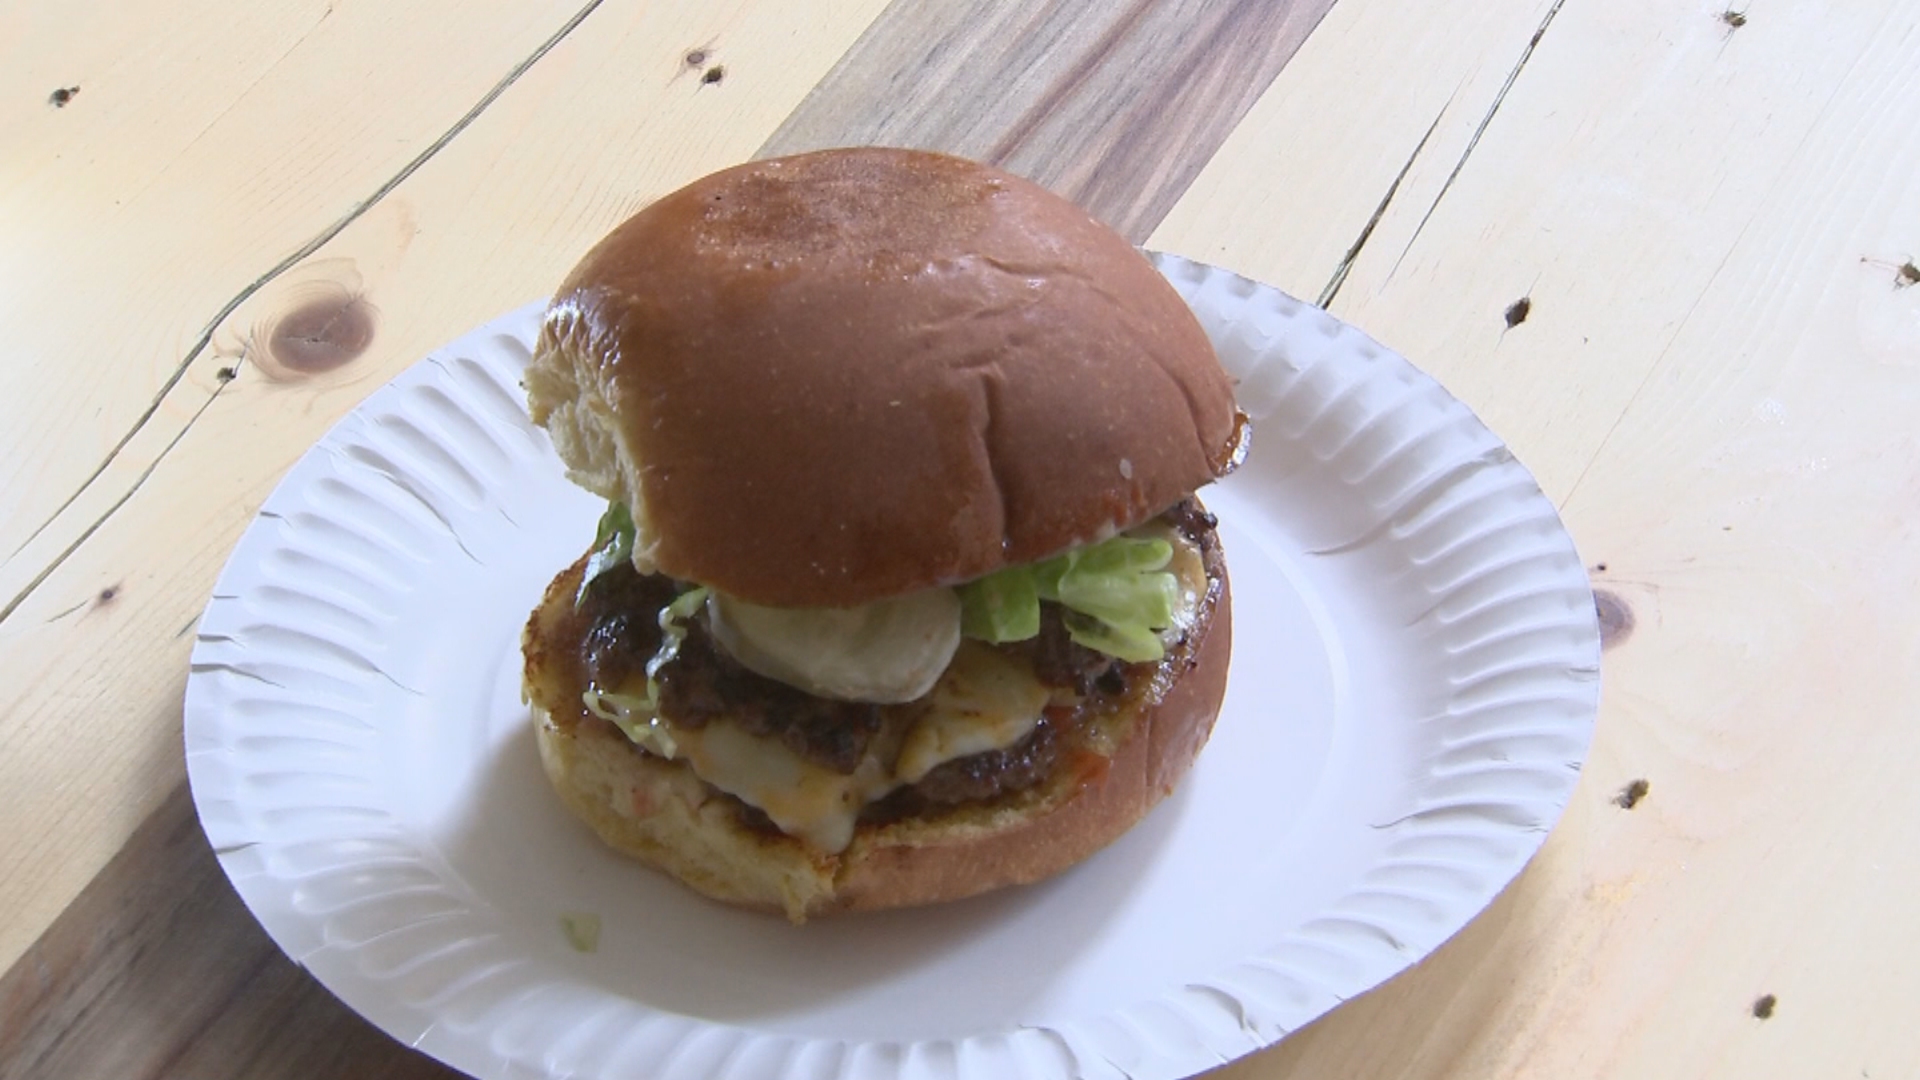 Stockyard Sandwich Company Ranked Best Burger In Pennsylvania, Survey Says